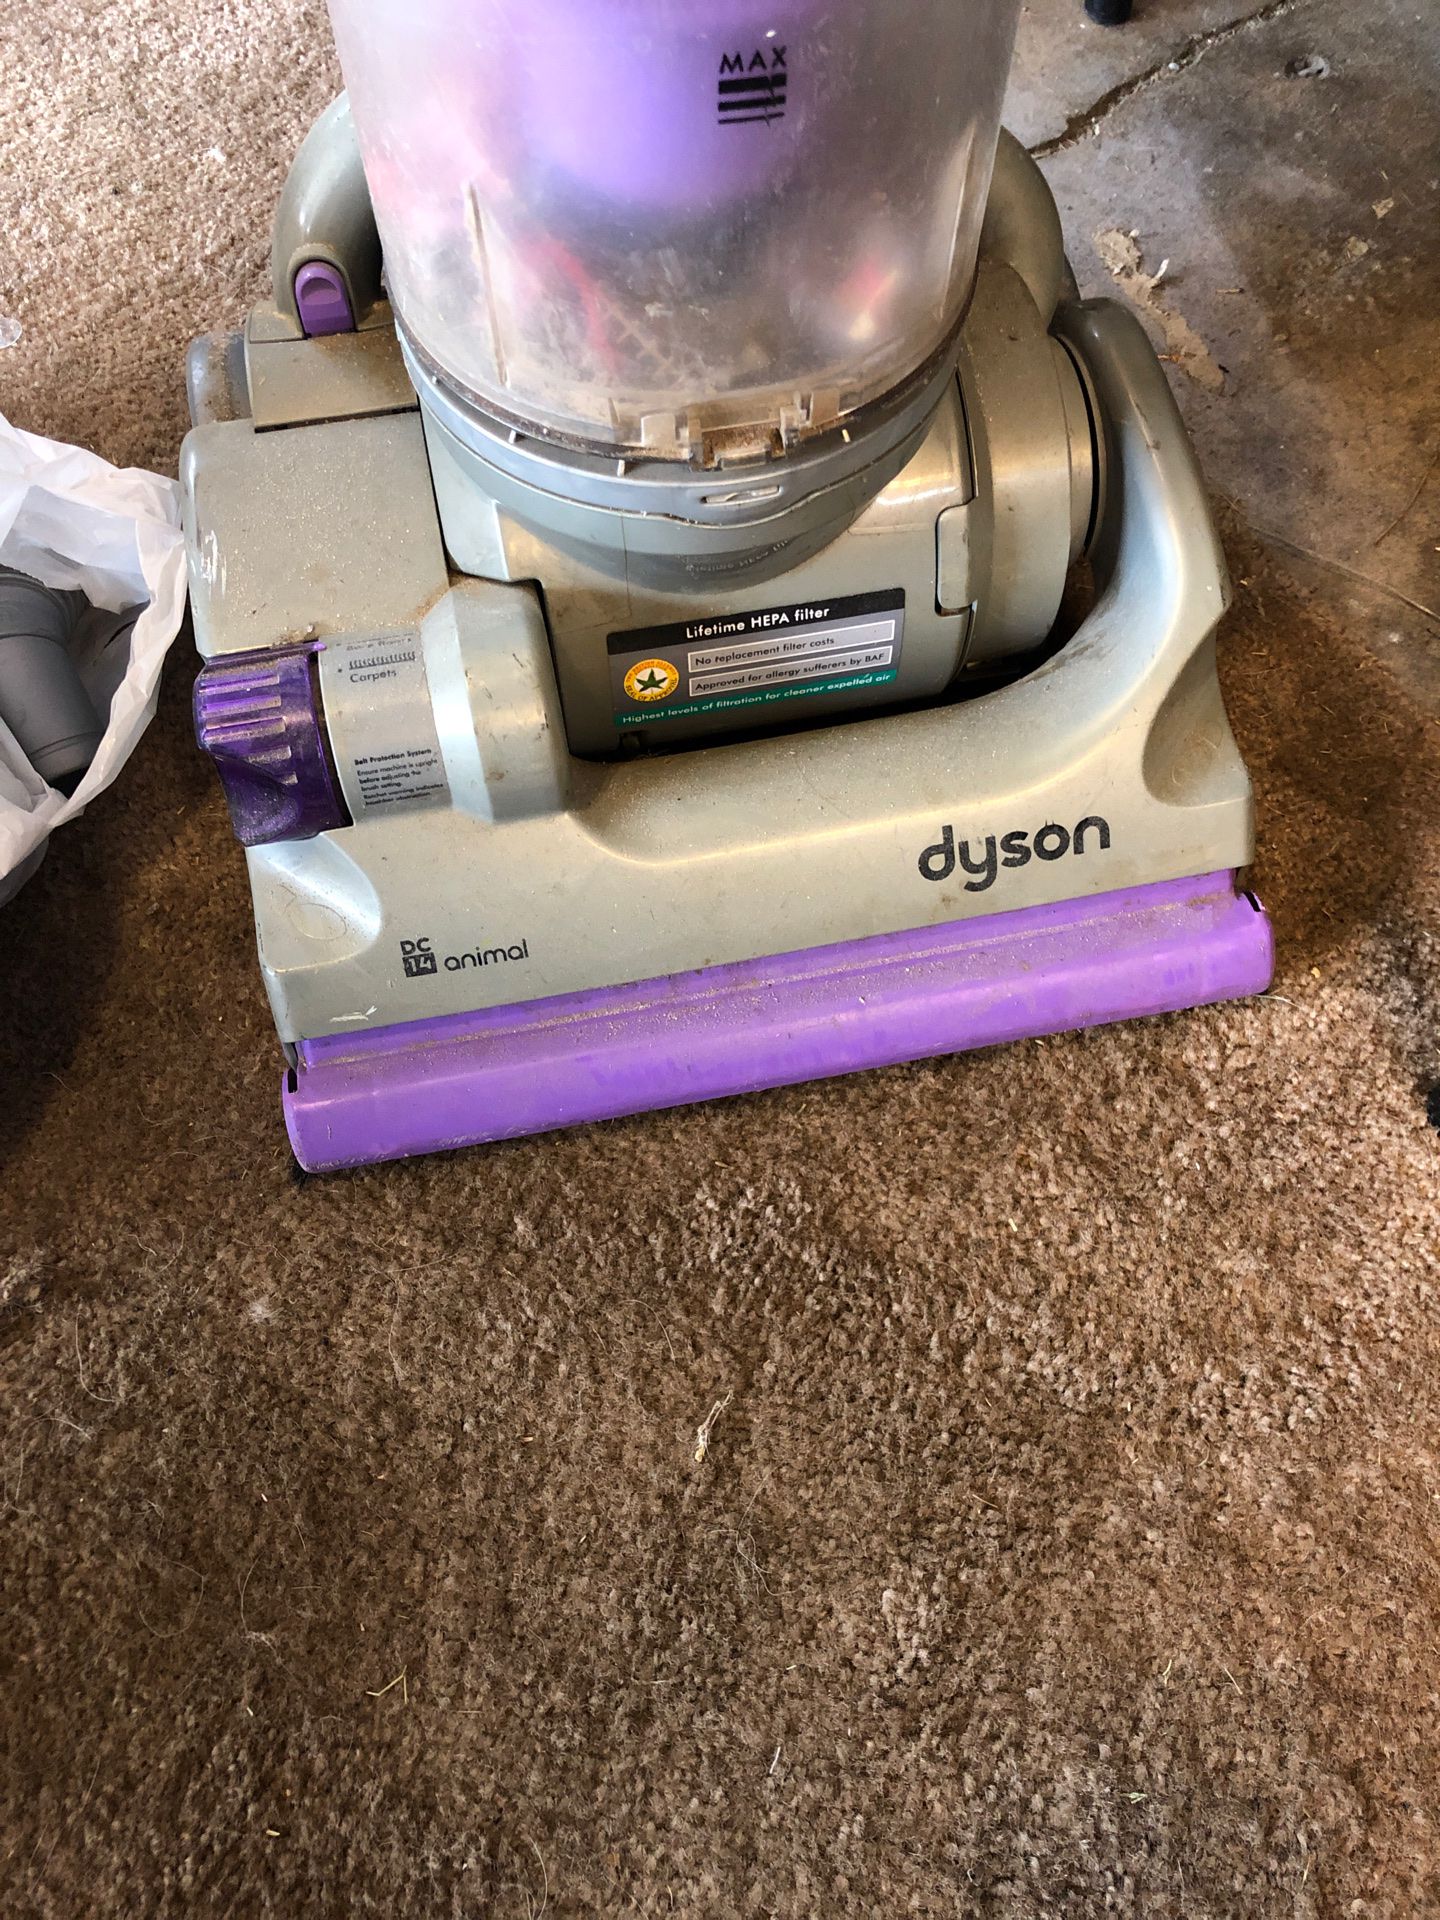 Dyson DC 14 animal vacuum cleaner